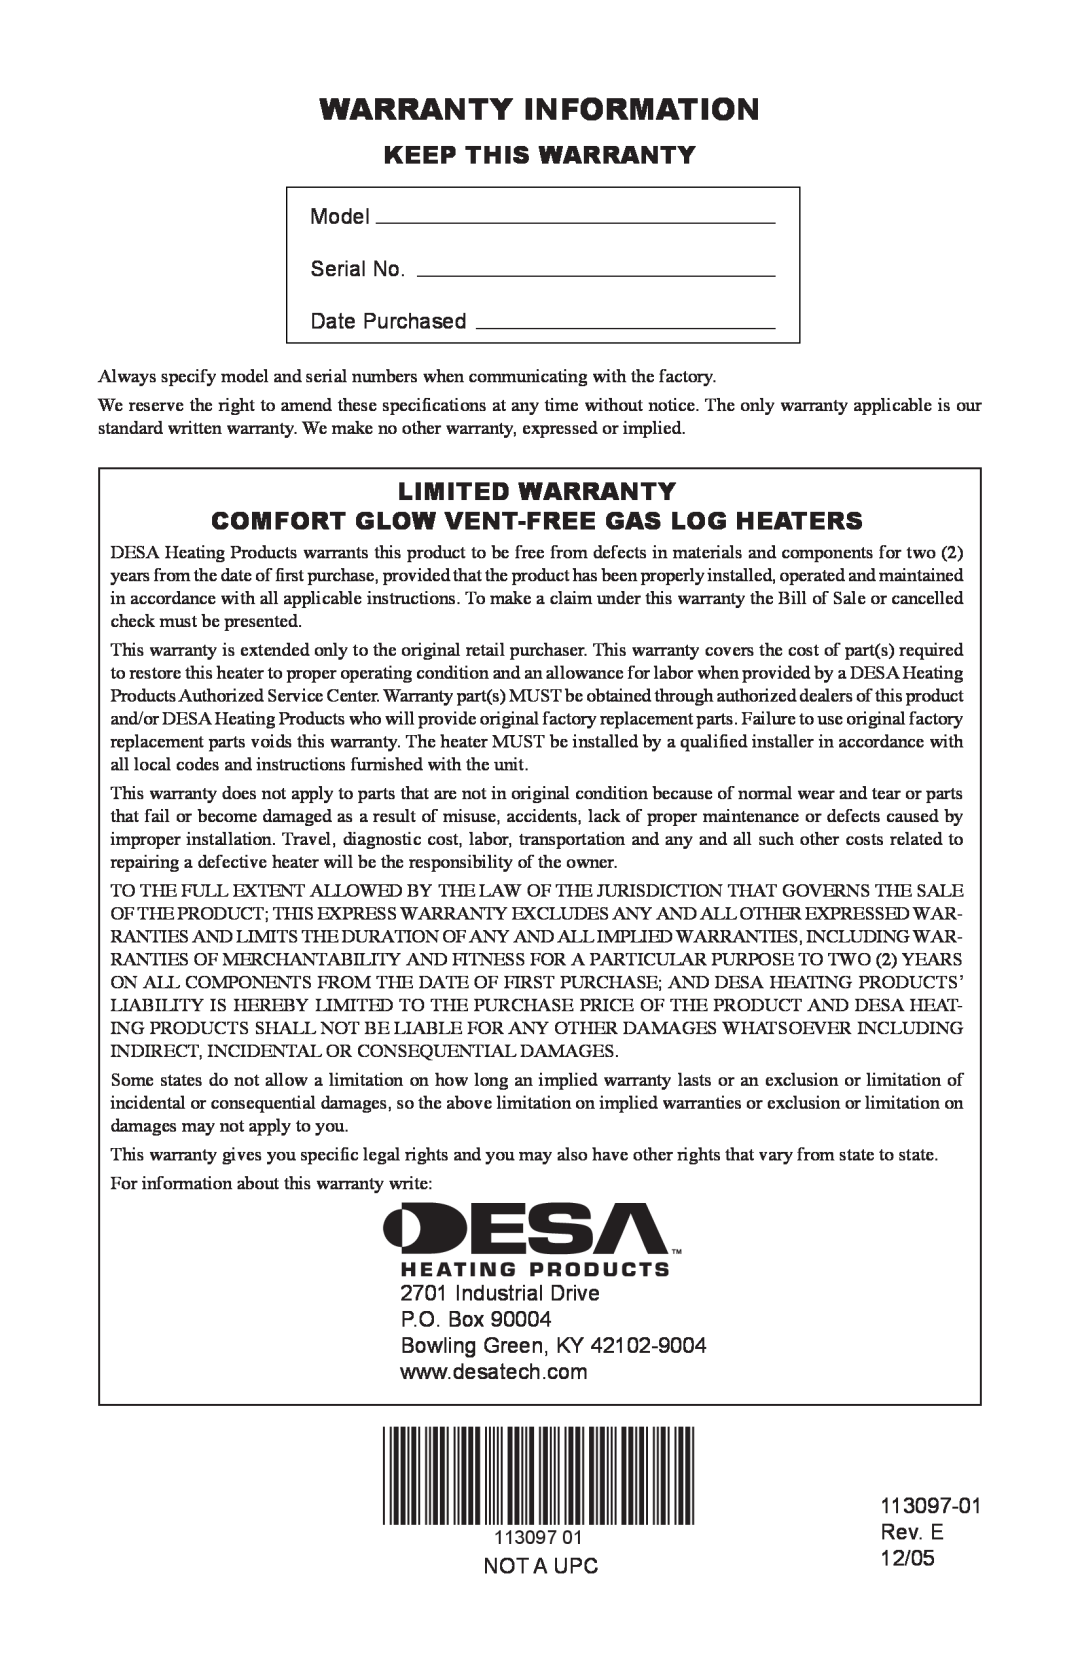 Desa CCL3018PTA/NTA Warranty Information, Keep This Warranty, Limited Warranty, Comfort Glow Vent-Freegas Log Heaters 